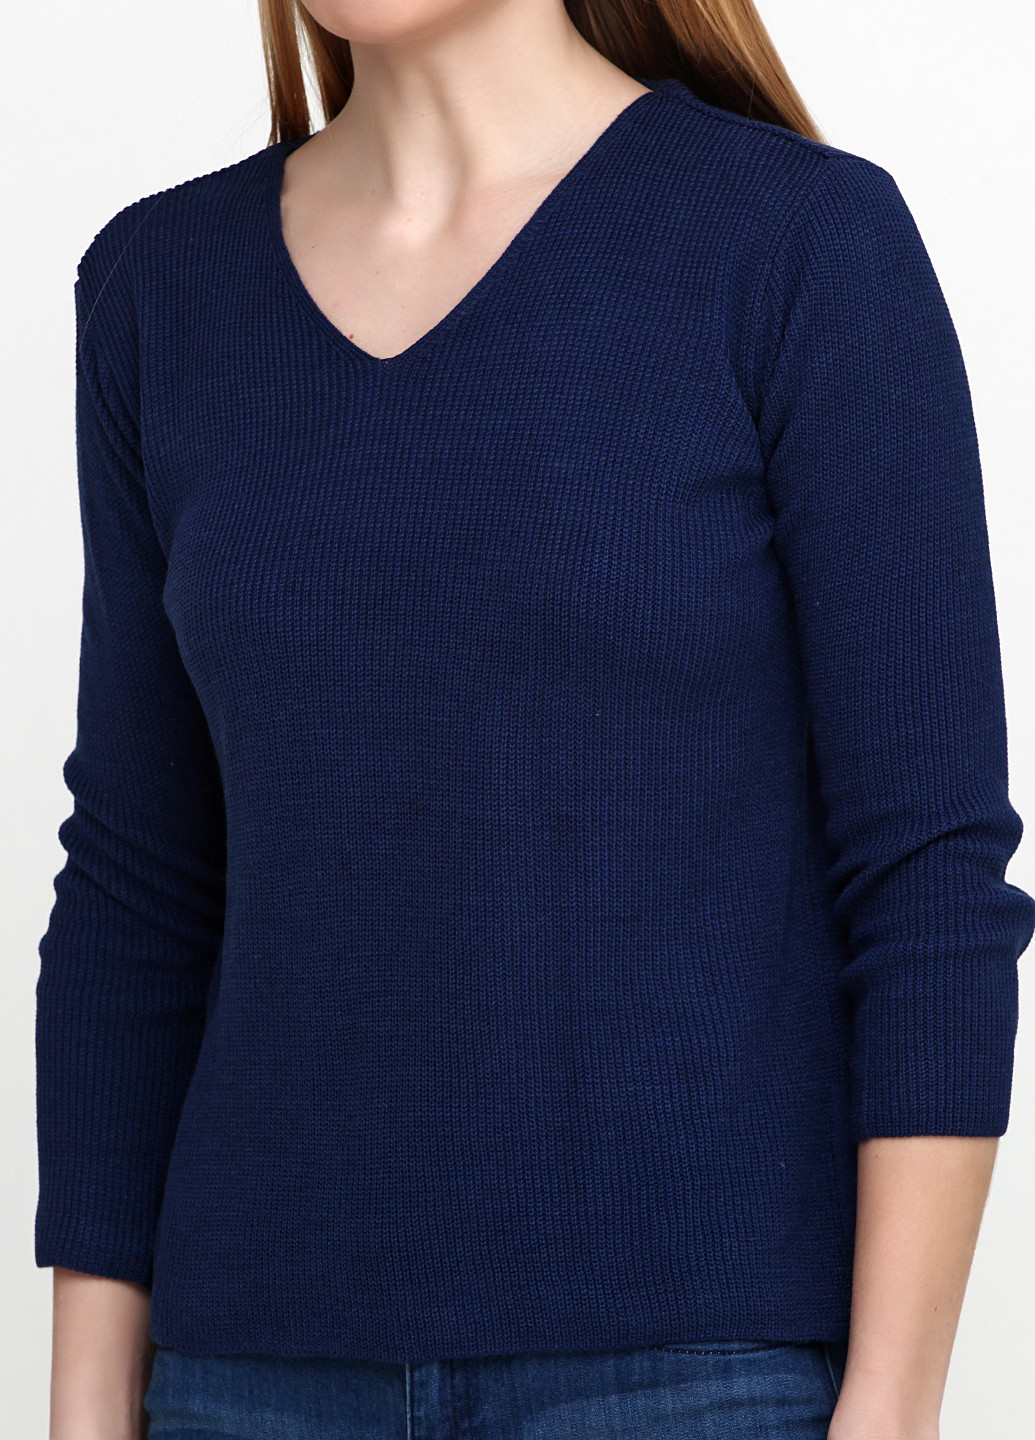 Темно-синий демисезонный пуловер пуловер Askar Triko